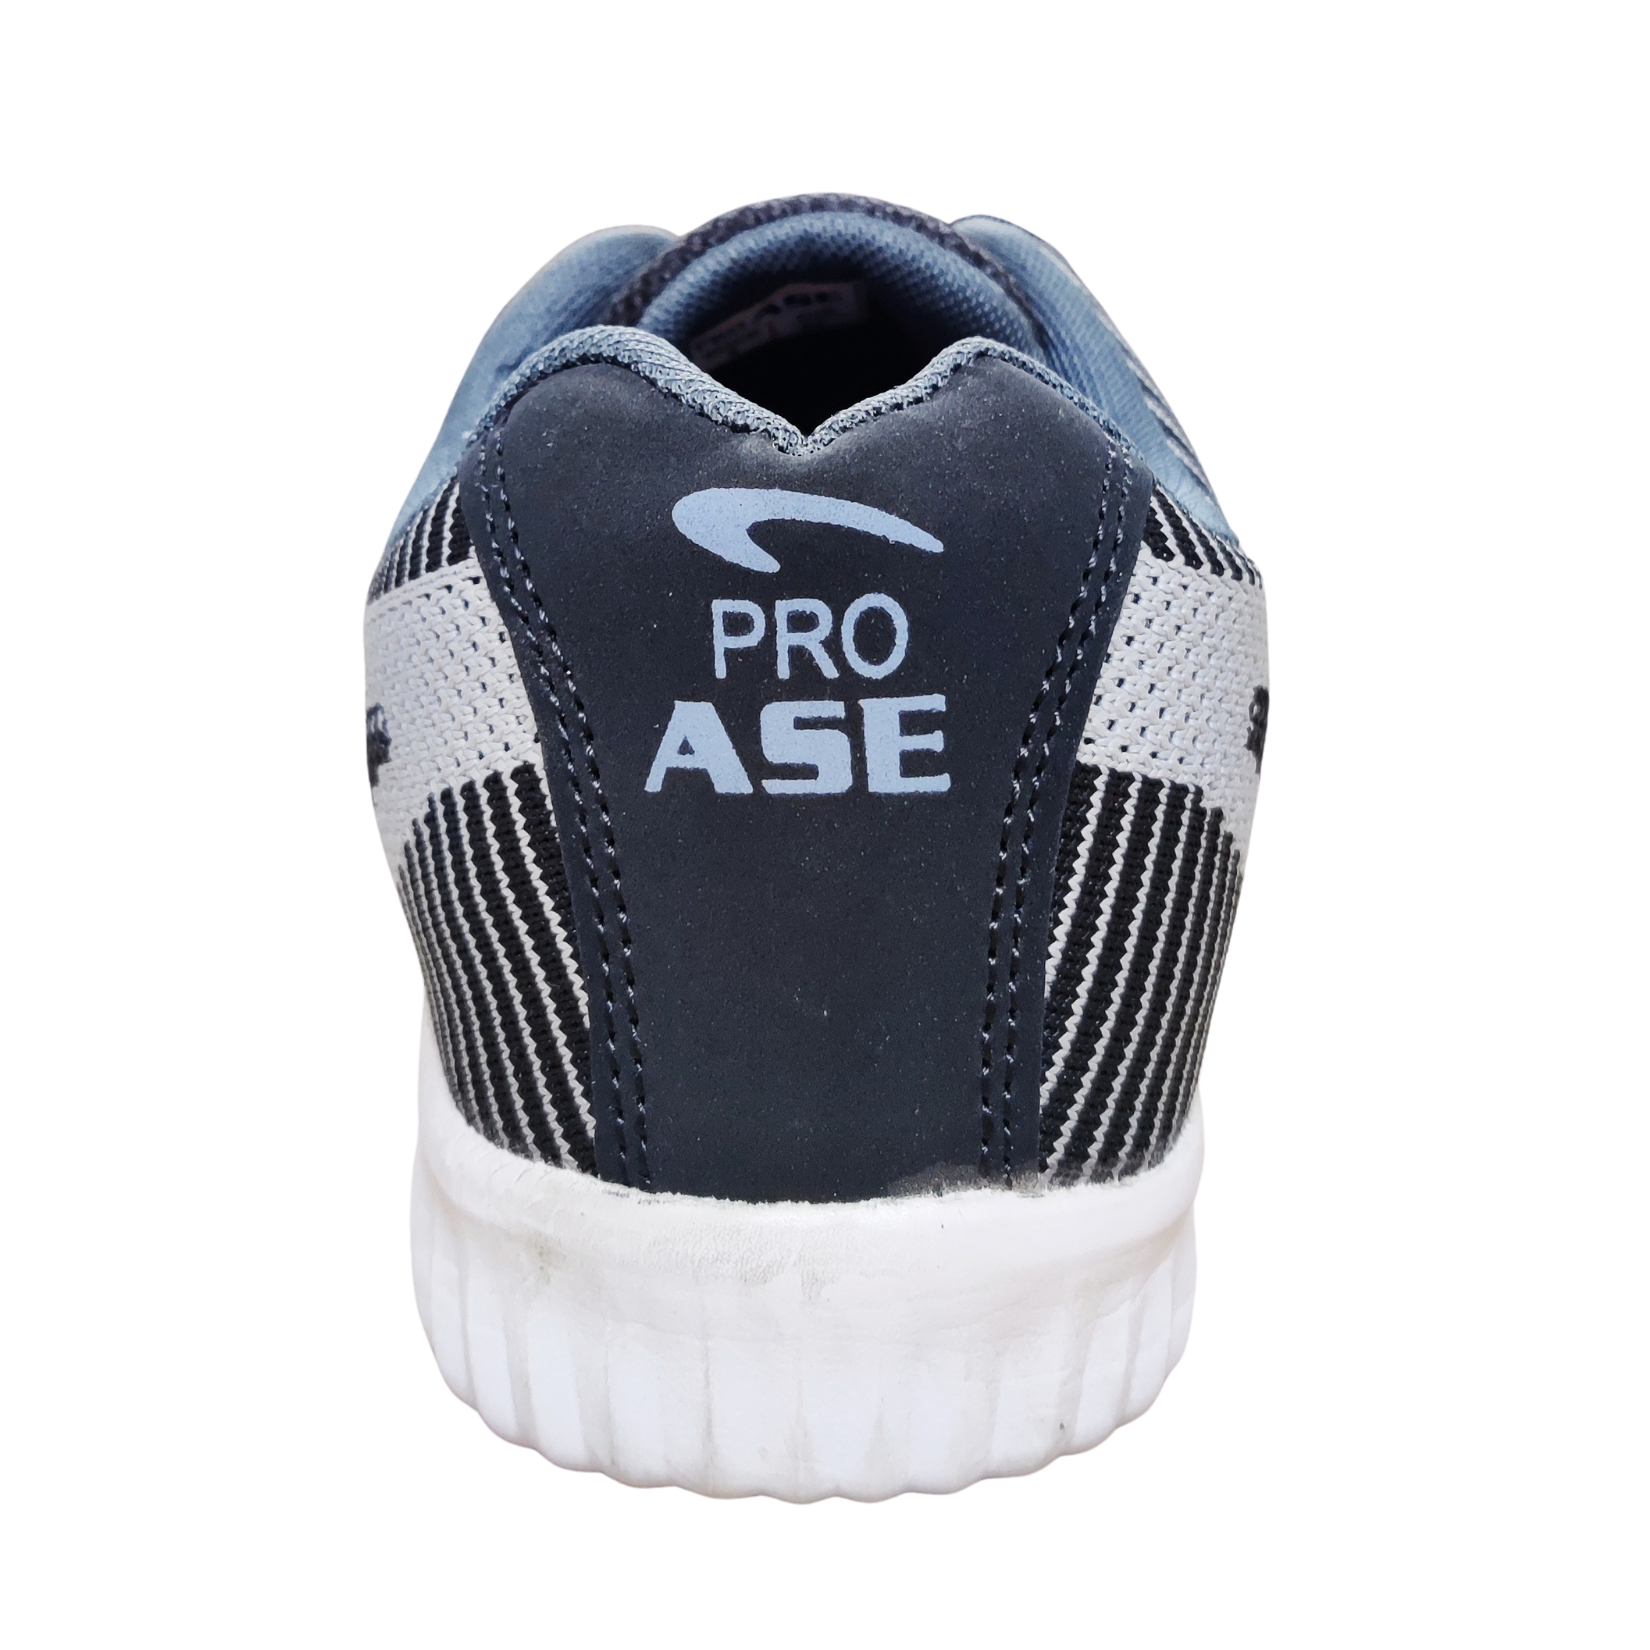 Pro ASE Jogging Shoe for Men